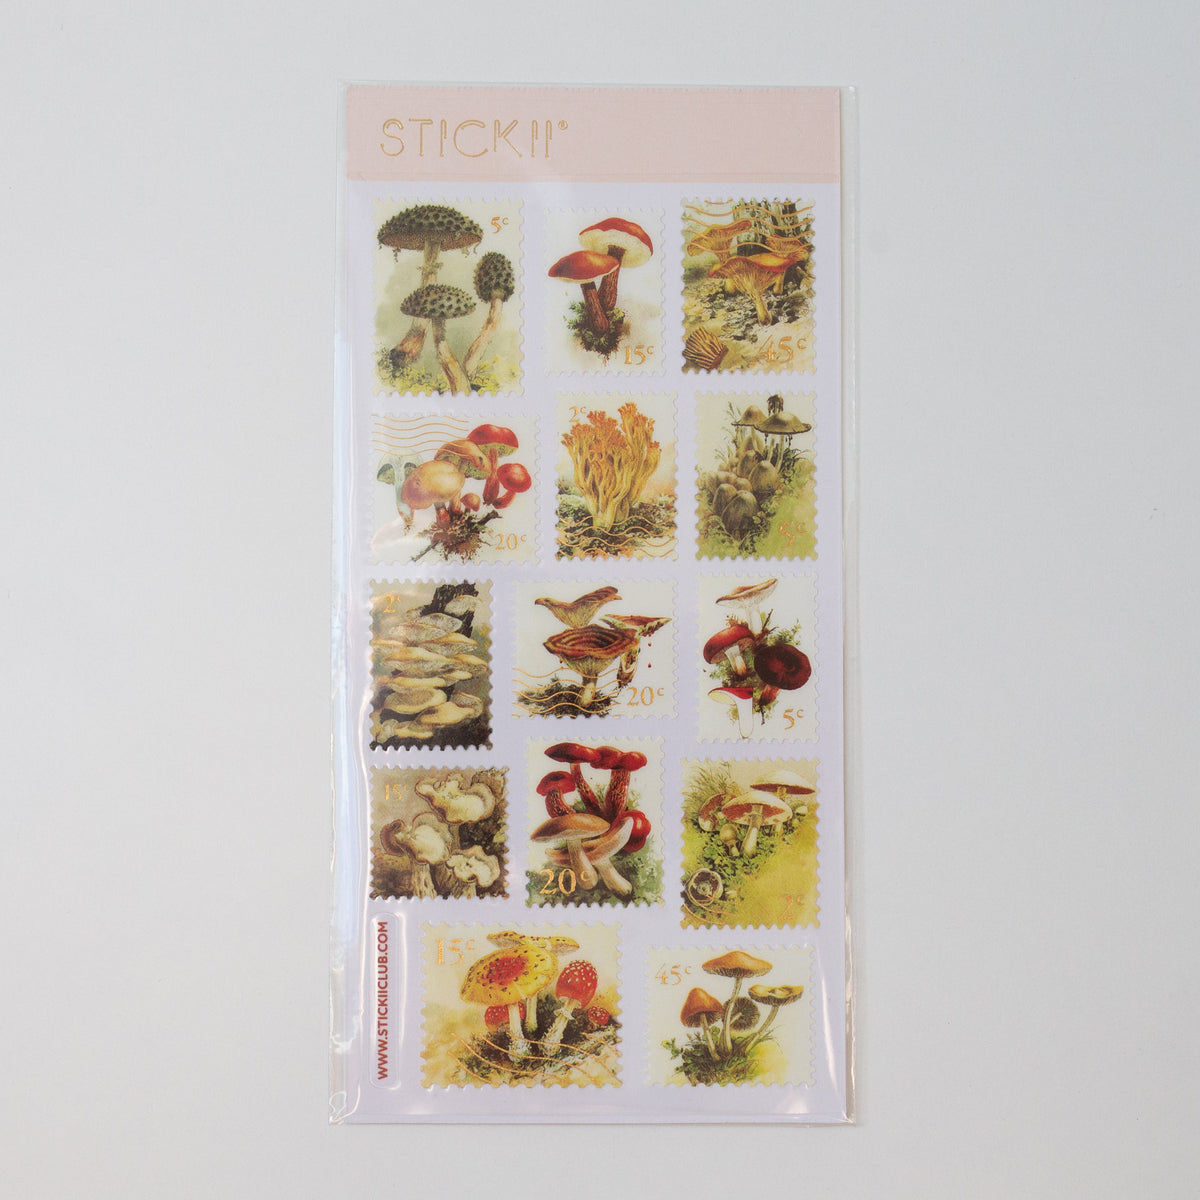 Stickii Sticker sheet Mushroom stamps